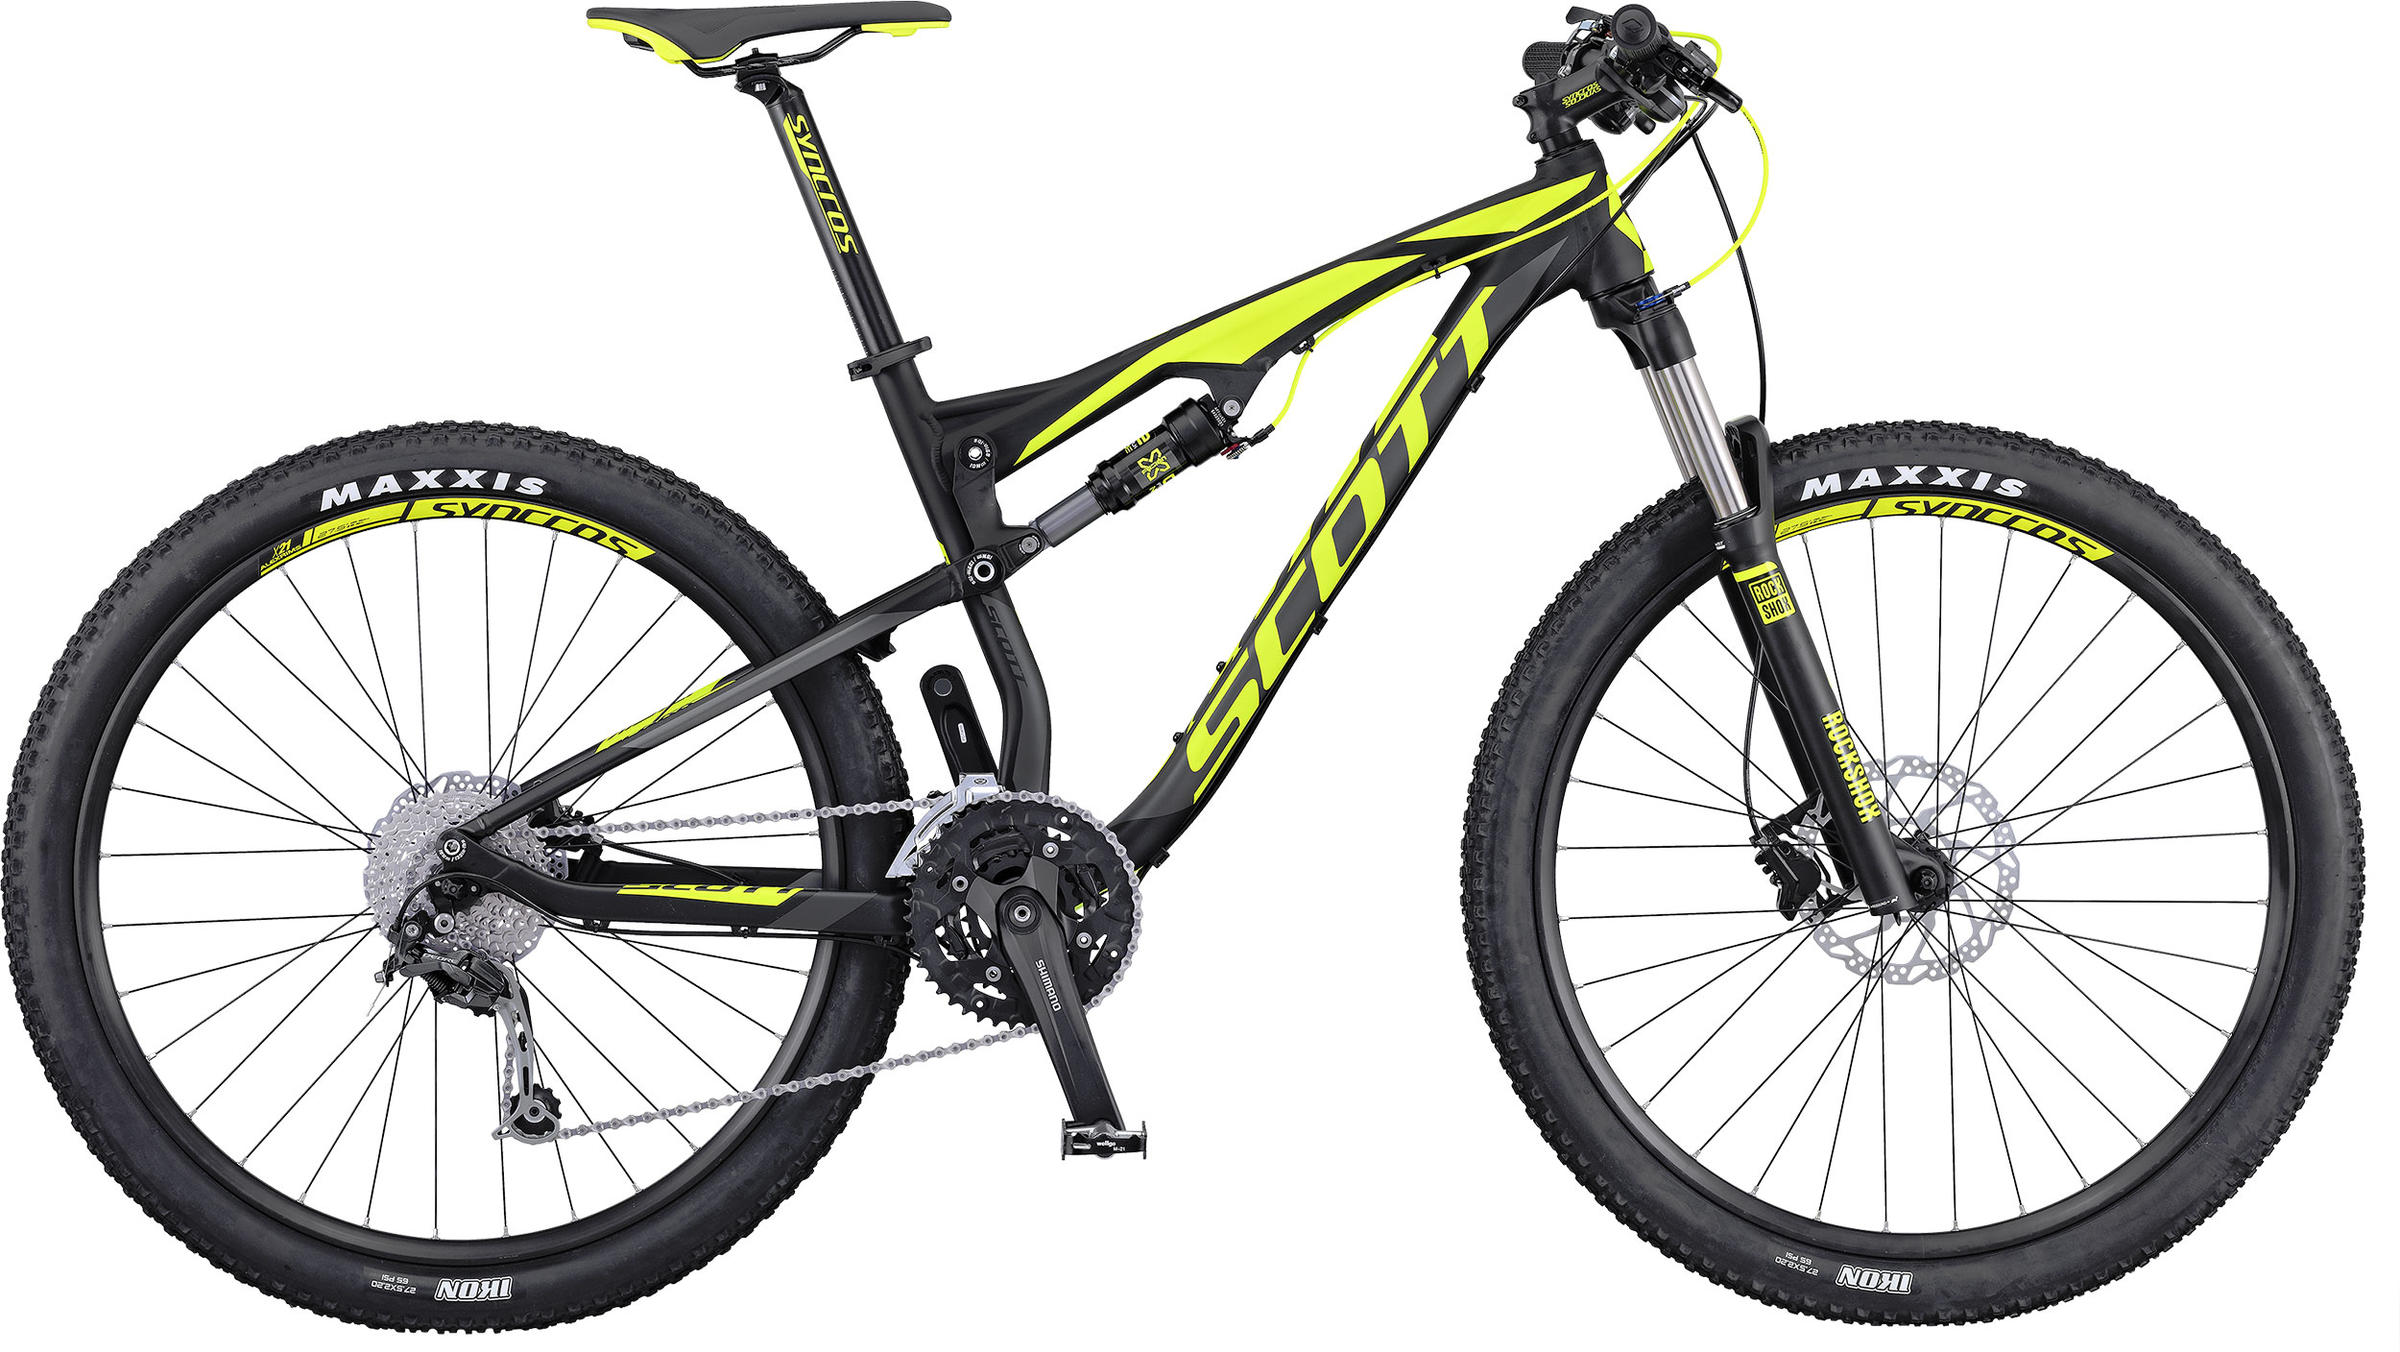 2016 Scott Spark 960 - Bicycle Details 